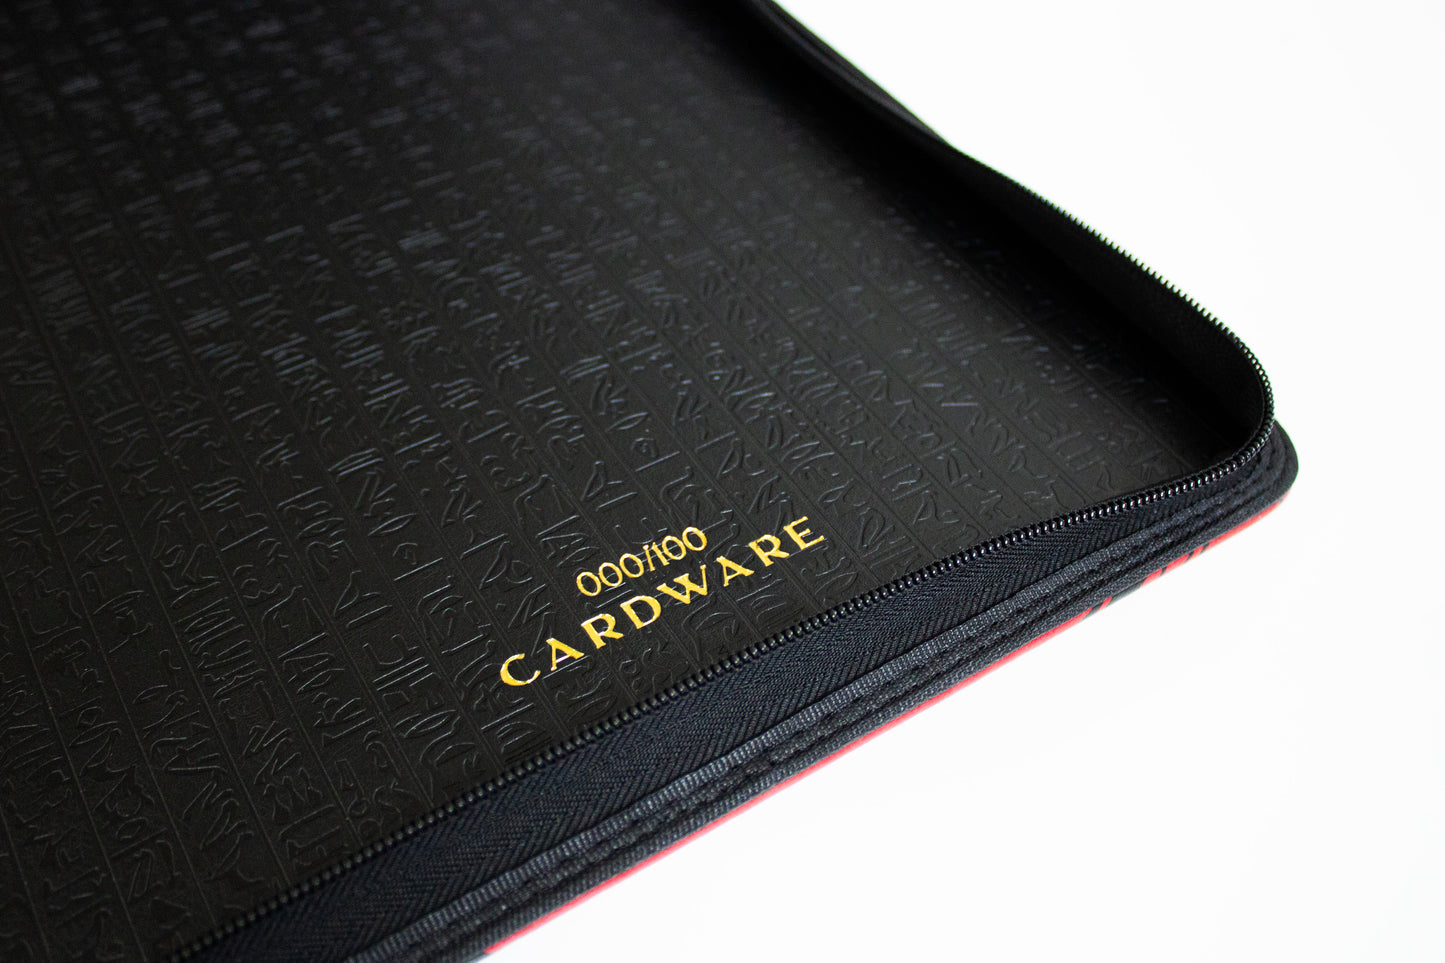 Cardware Binder - GBI-001 1st Edition